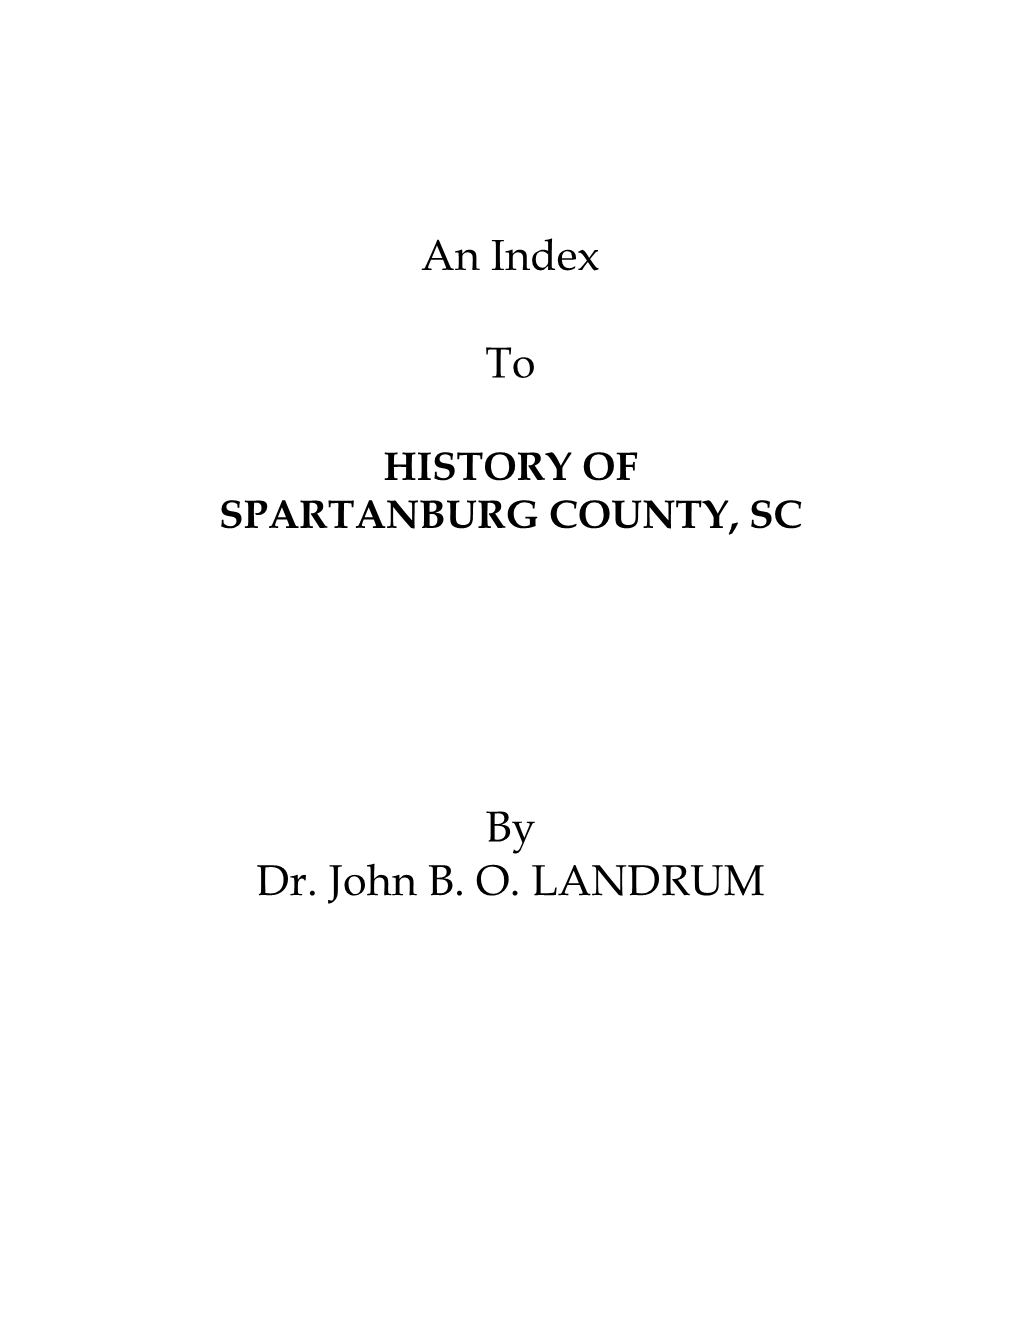 An Index to by Dr. John B. O. LANDRUM